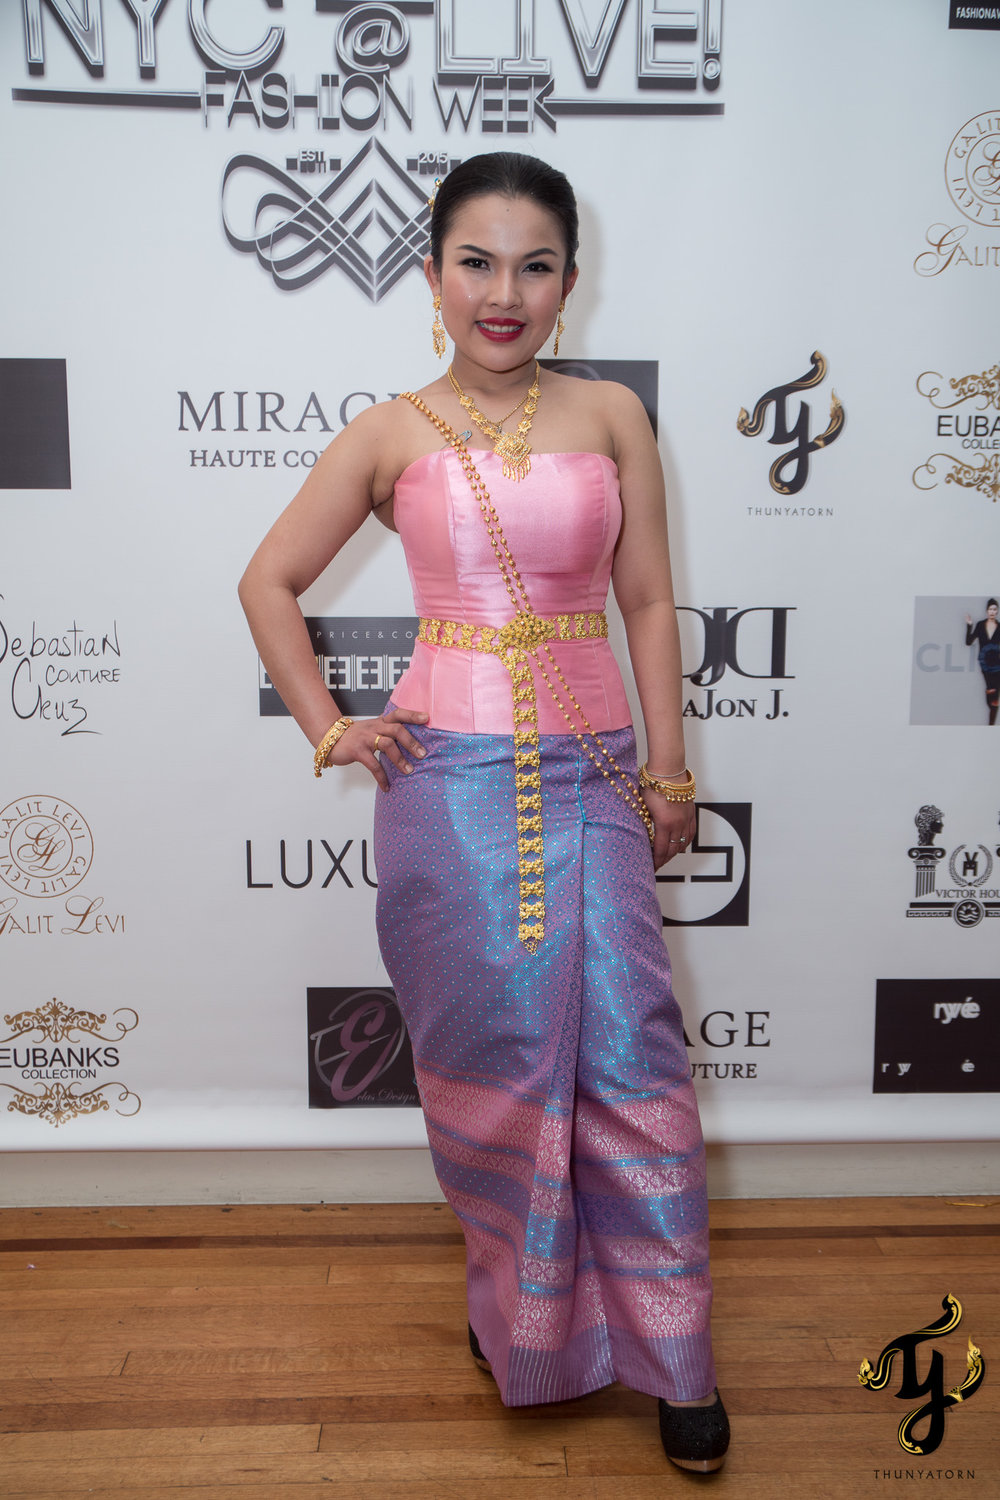 Thunyatorn is Showing North America How Beautiful Yet Modern Thai Fashion Can Be